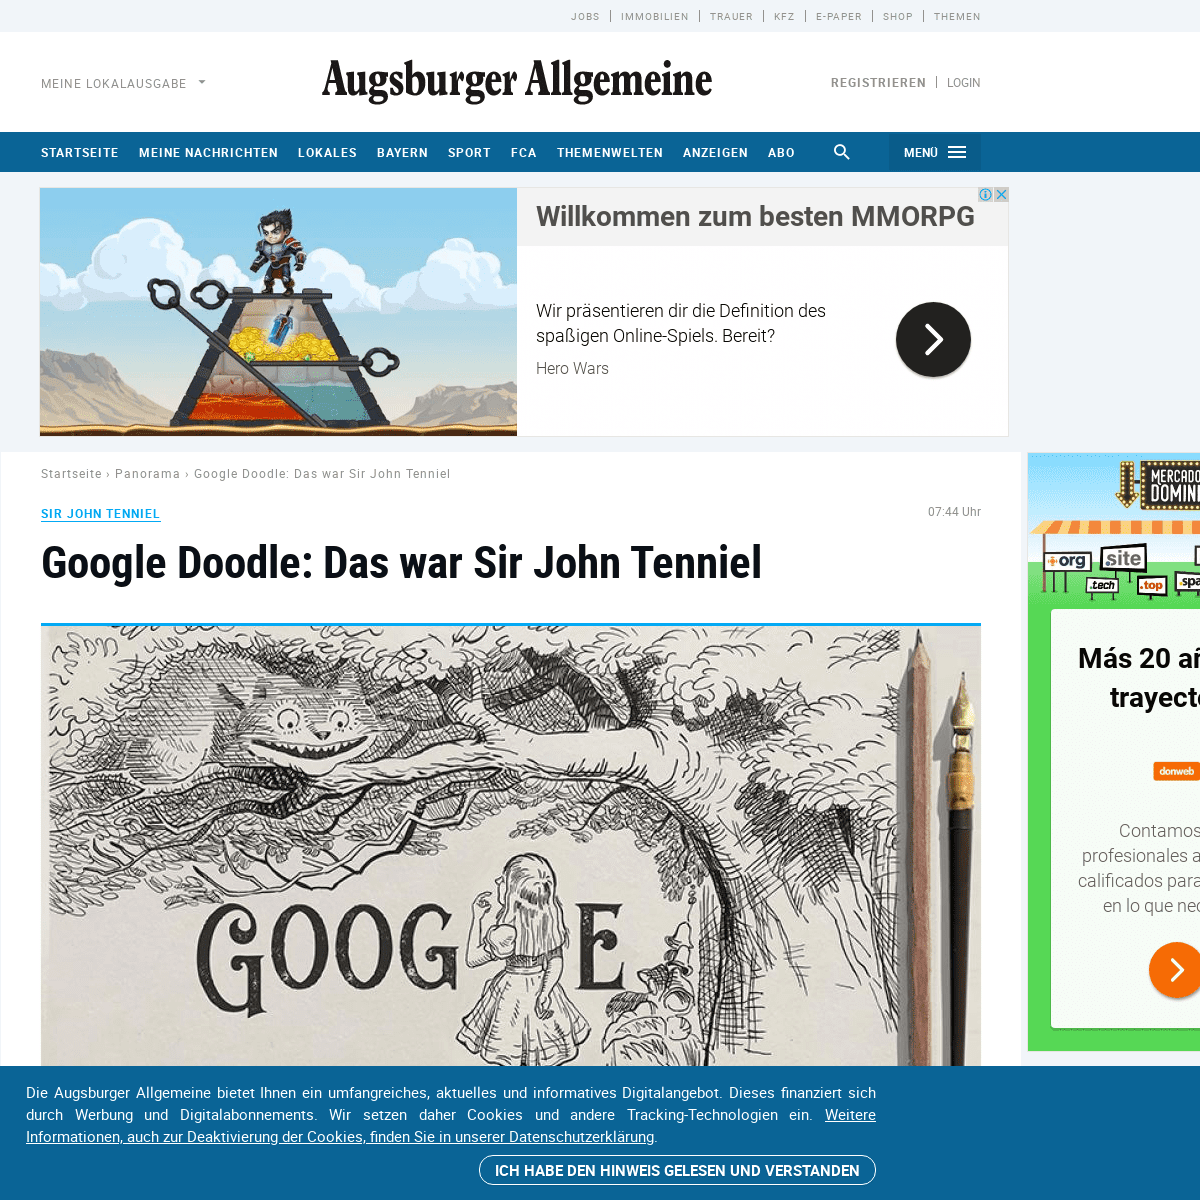 A complete backup of www.augsburger-allgemeine.de/panorama/Google-Doodle-Das-war-Sir-John-Tenniel-id56920656.html